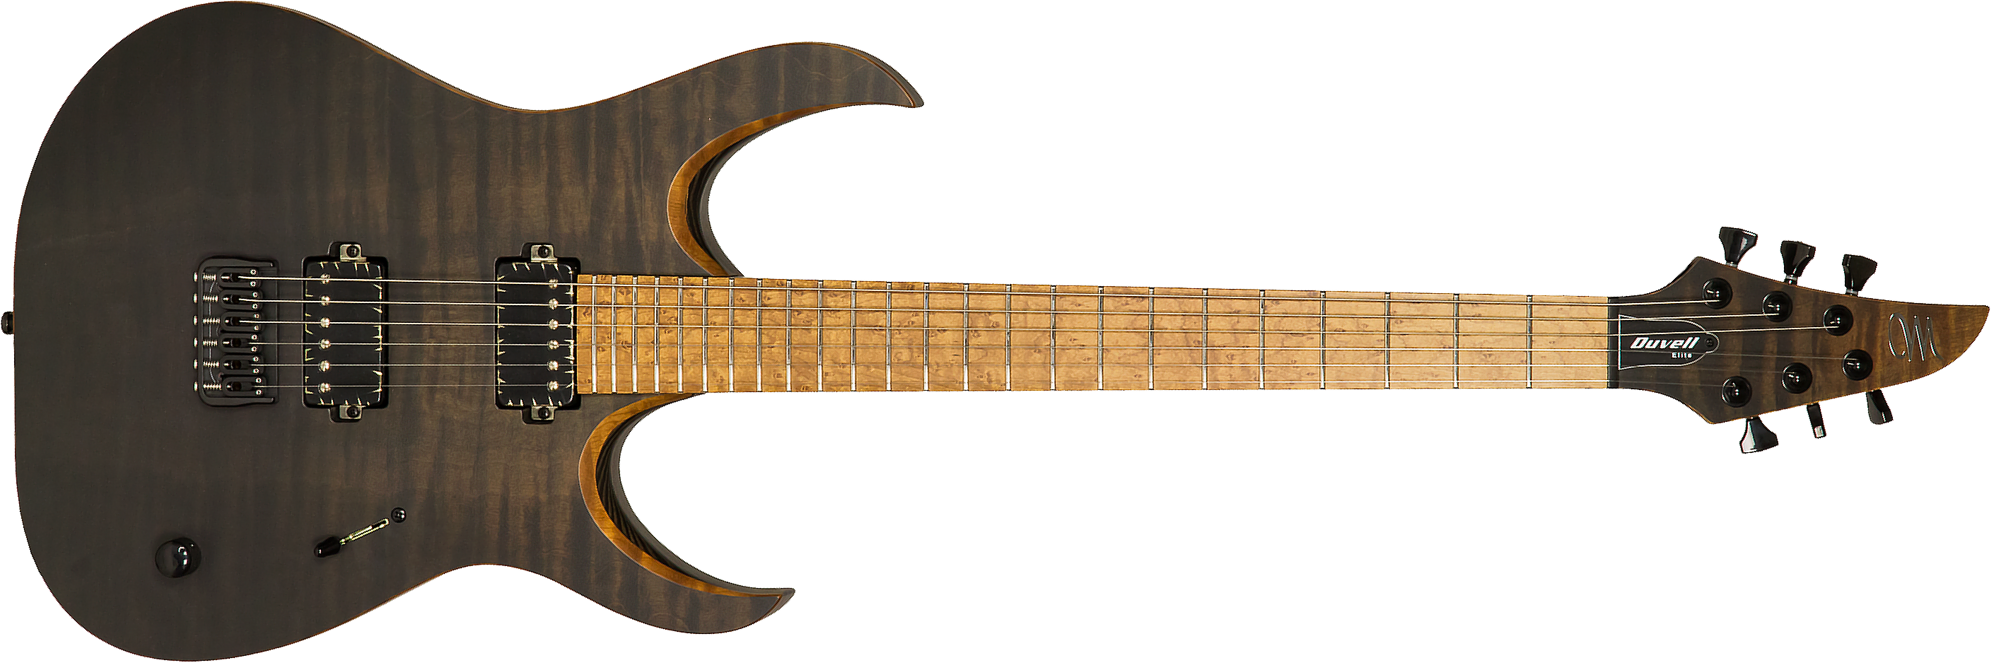 Mayones Guitars Duvell Elite 6 2h Seymour Duncan Ht Mn #df2106534 - Trans Jeans Black Horizon - Metal electric guitar - Main picture